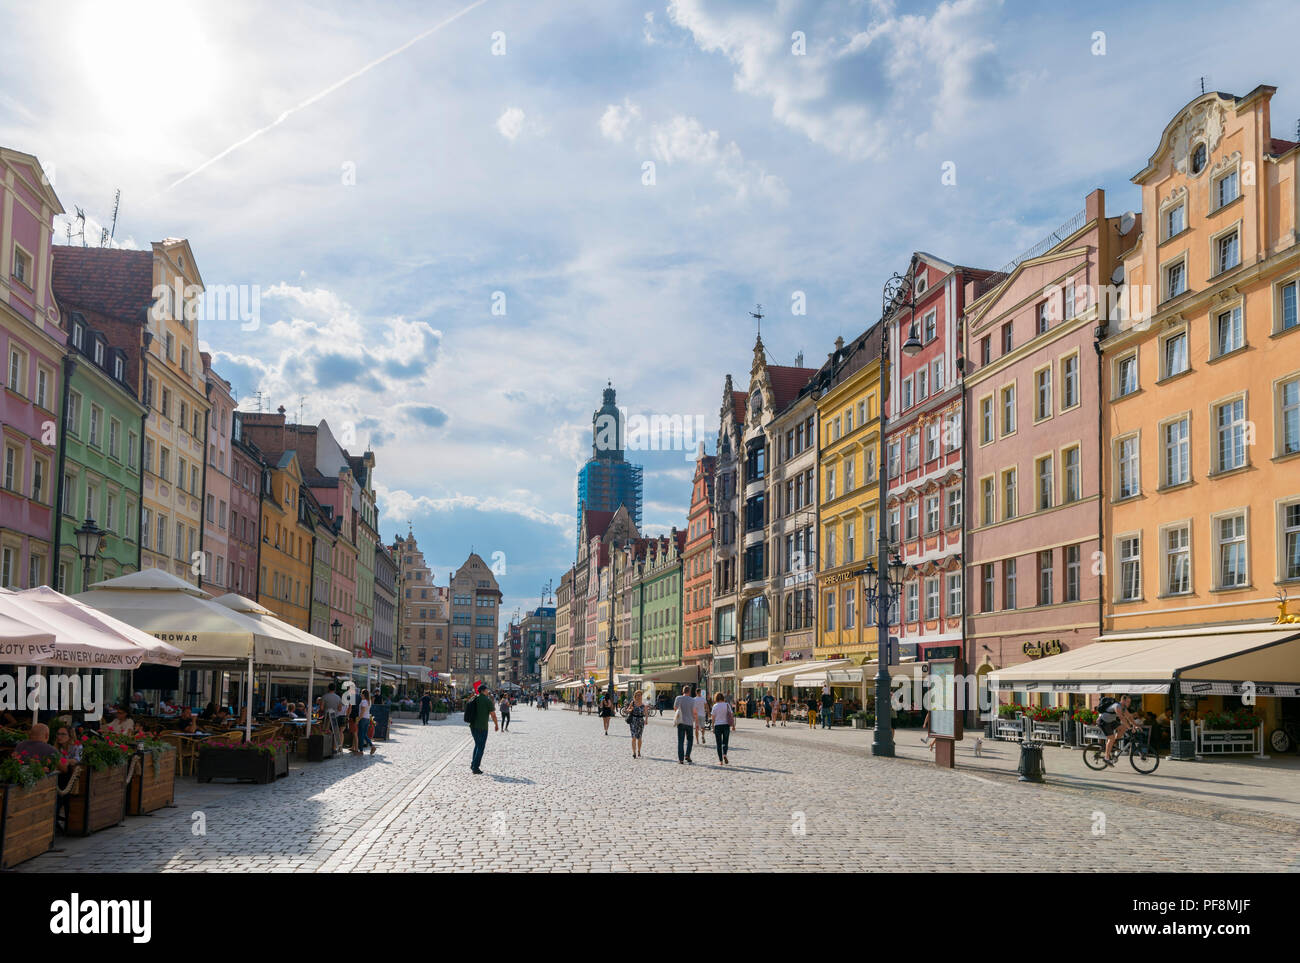 Wroclaw, Old Town (Stare Miasto). Market Square (Rynek we Wrocławiu), Wroclaw, Silesia, Poland Stock Photo